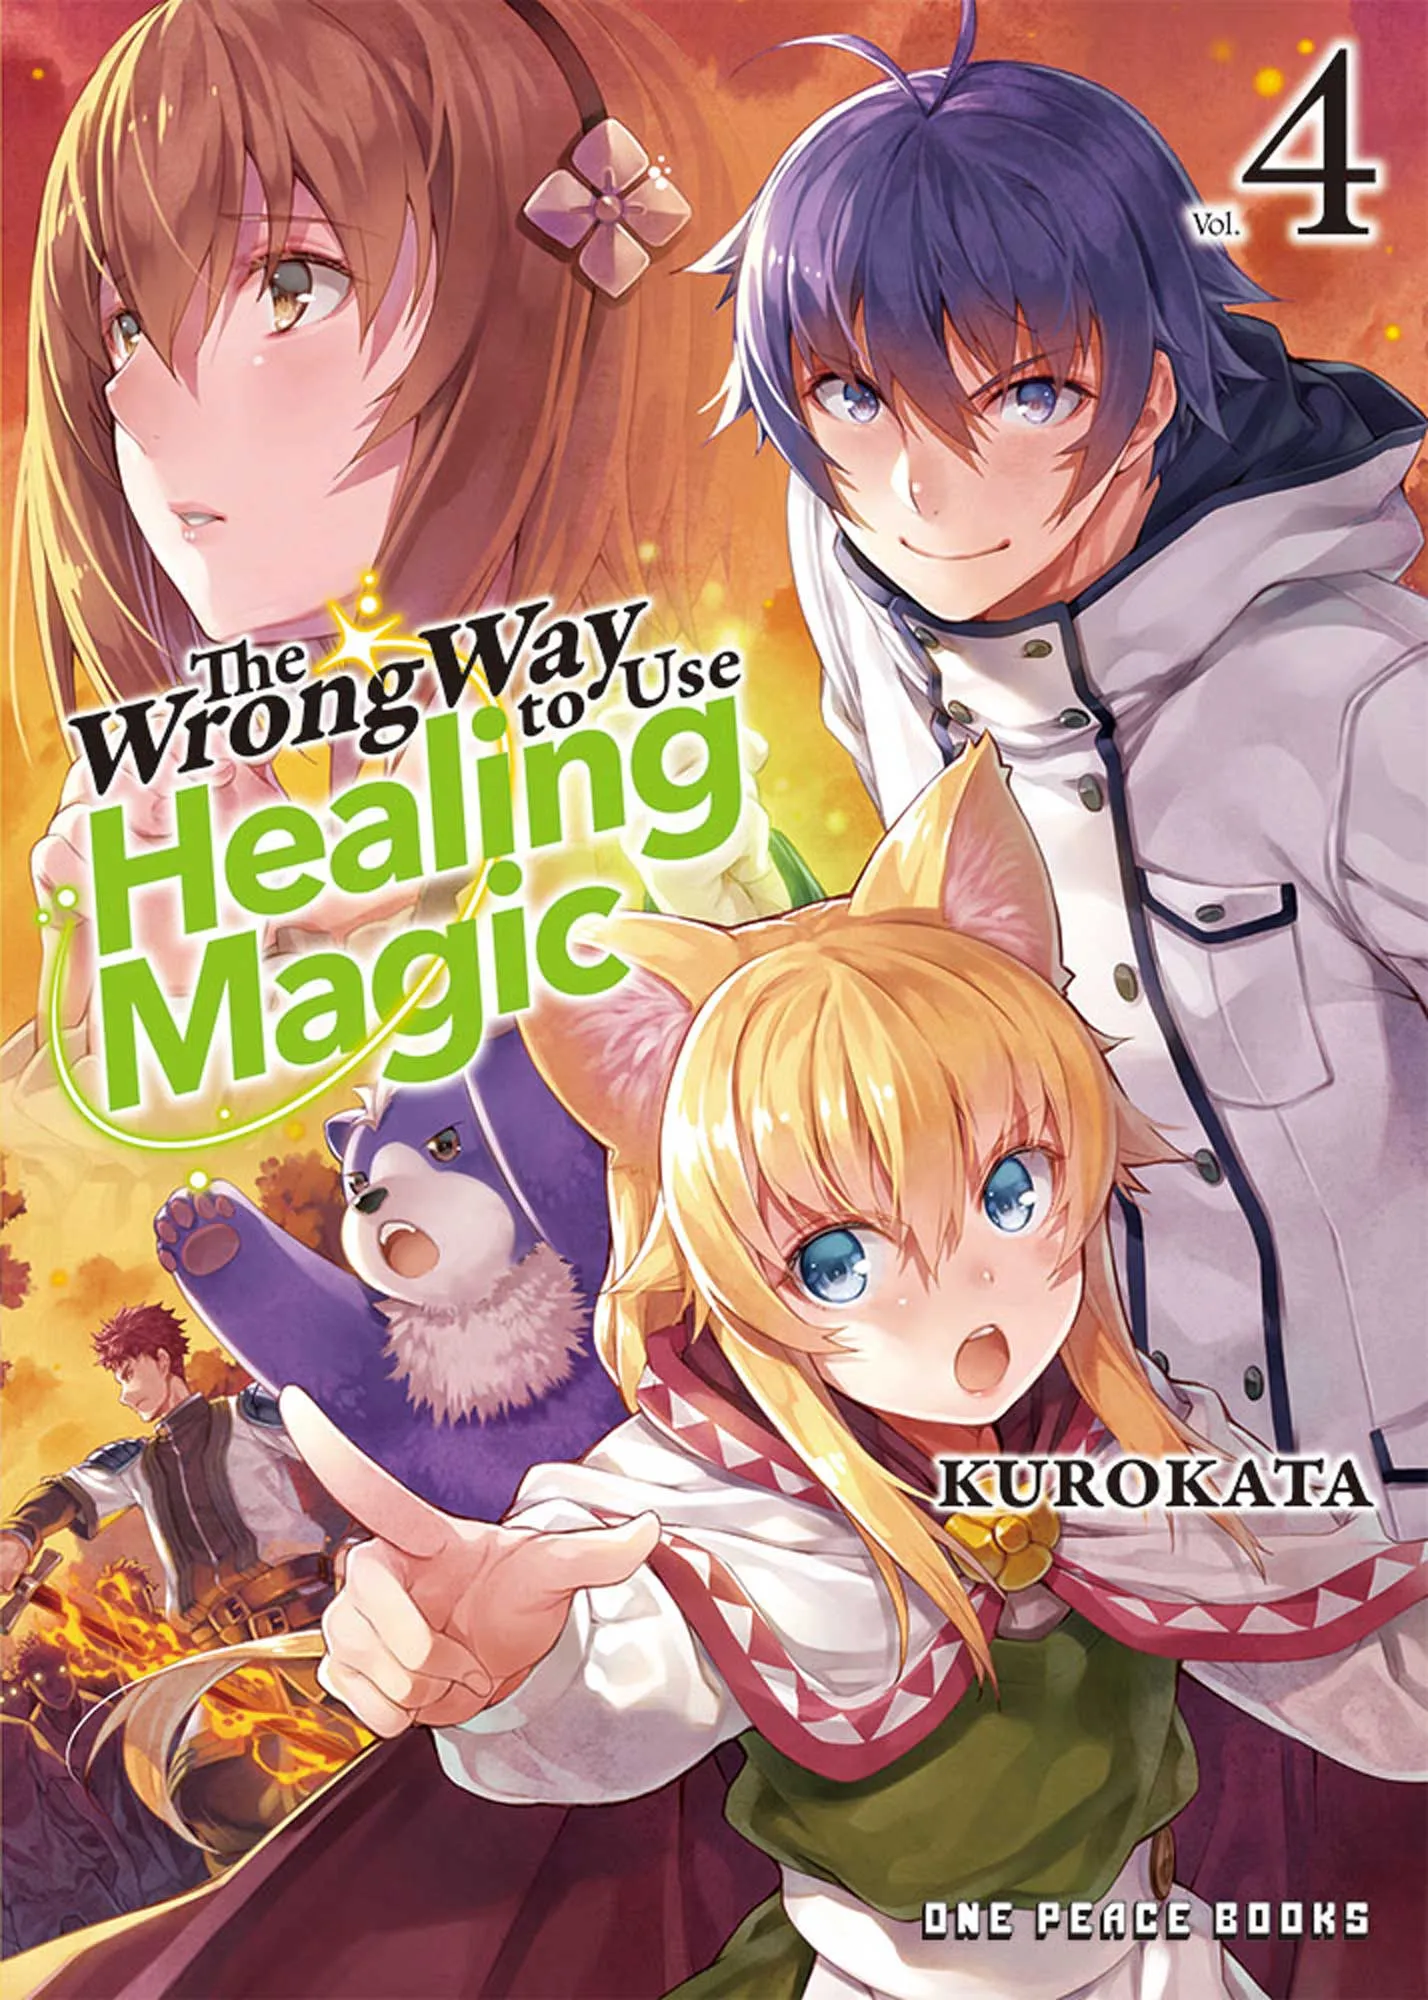 The Wrong Way to Use Healing Magic Volume 4: Light Novel (The Wrong Way to Use Healing Magic #4)